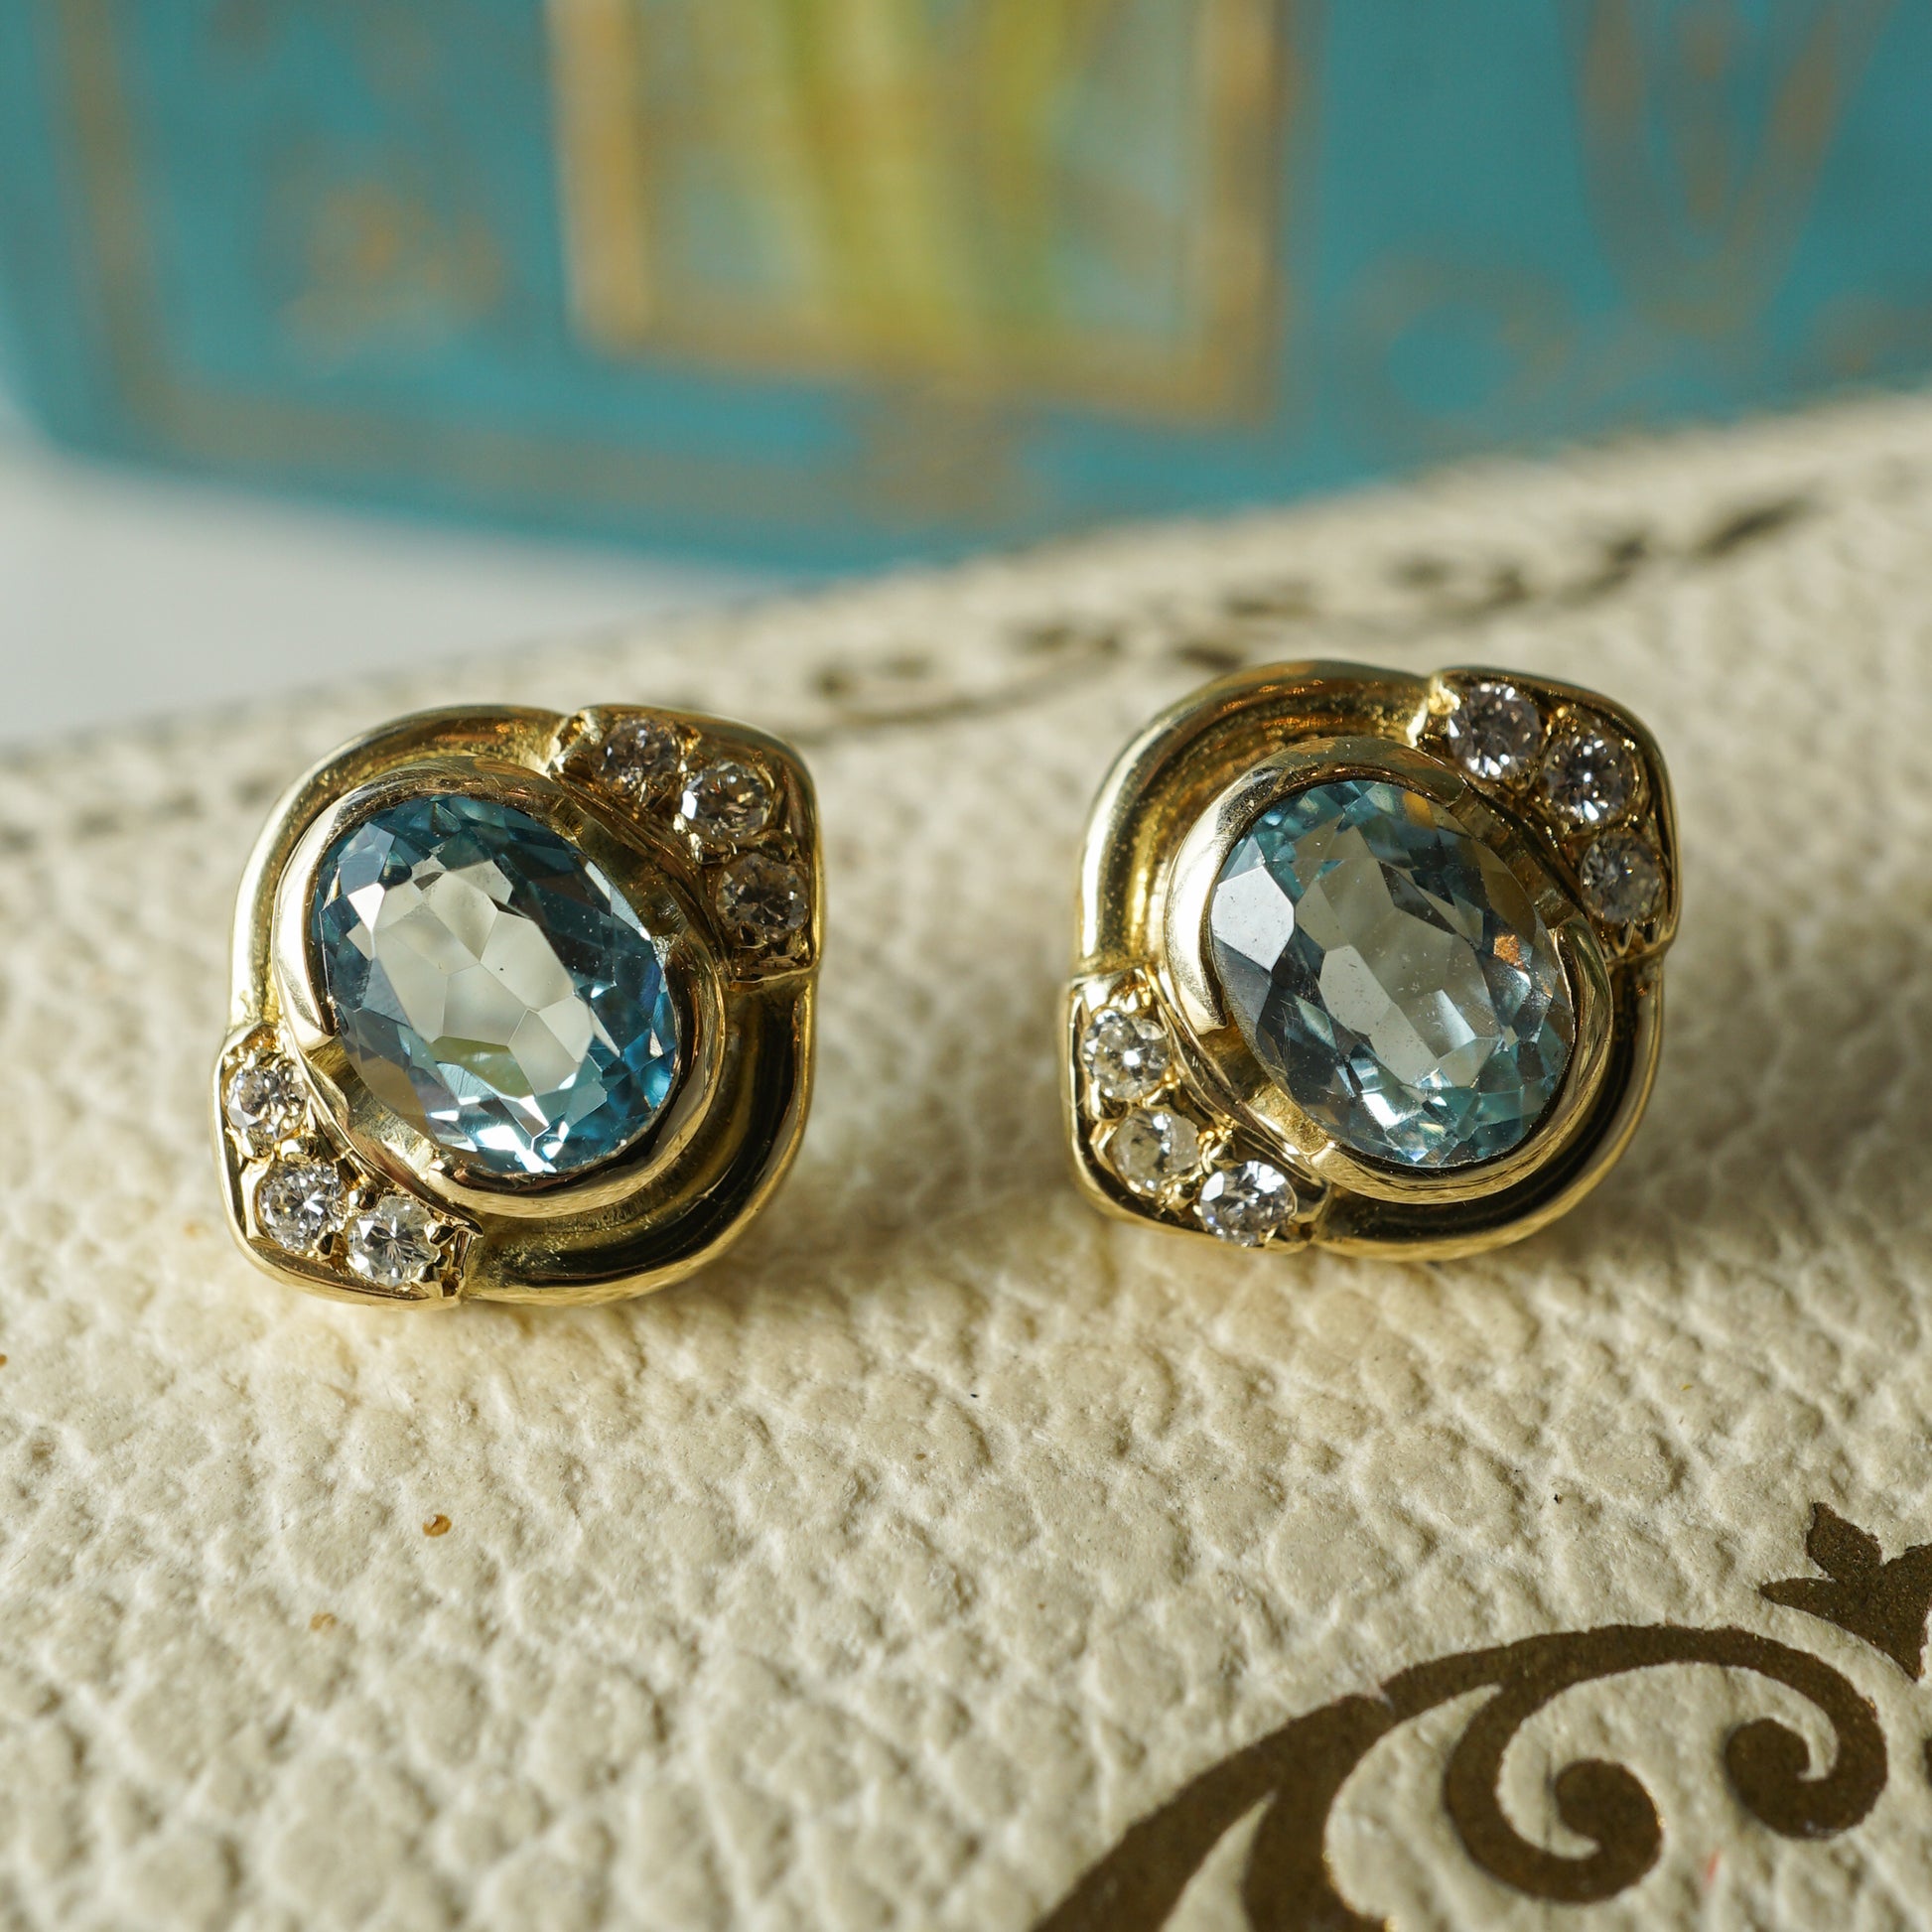 Aquamarine & Diamond Stud Earrings in 18k Yellow Gold